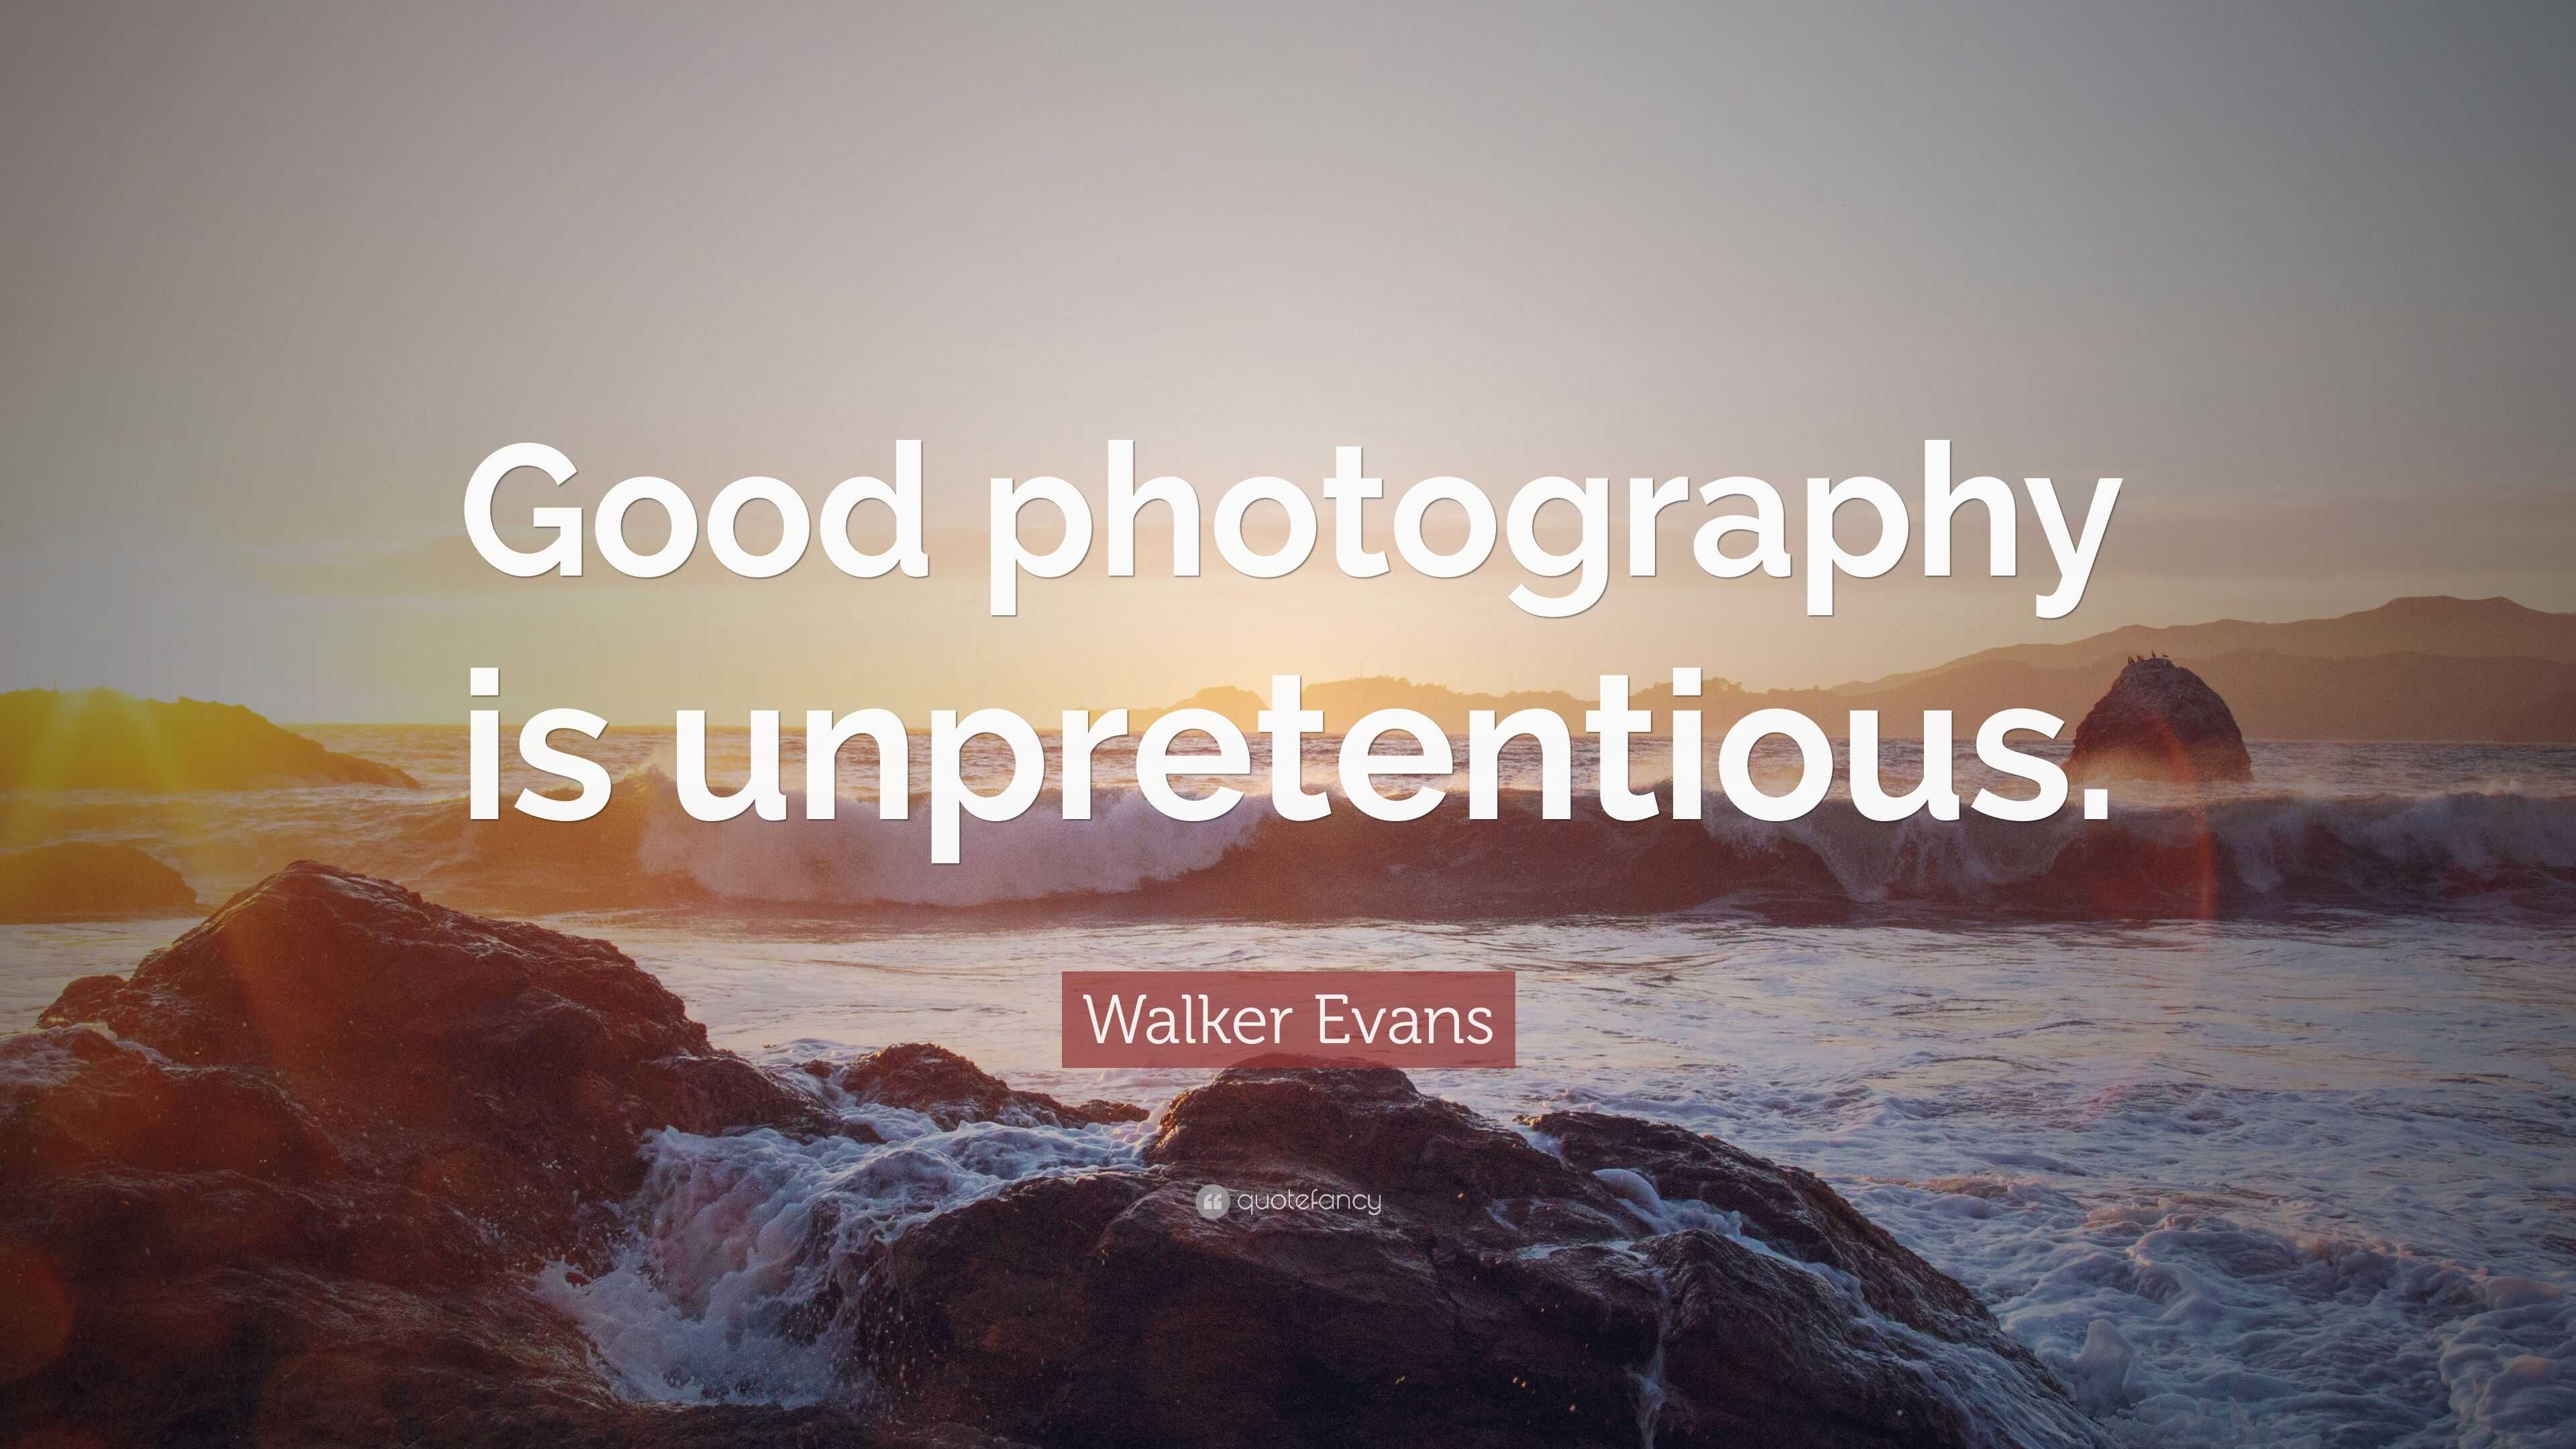 Walker Evans Quote: “Good photography is unpretentious.”